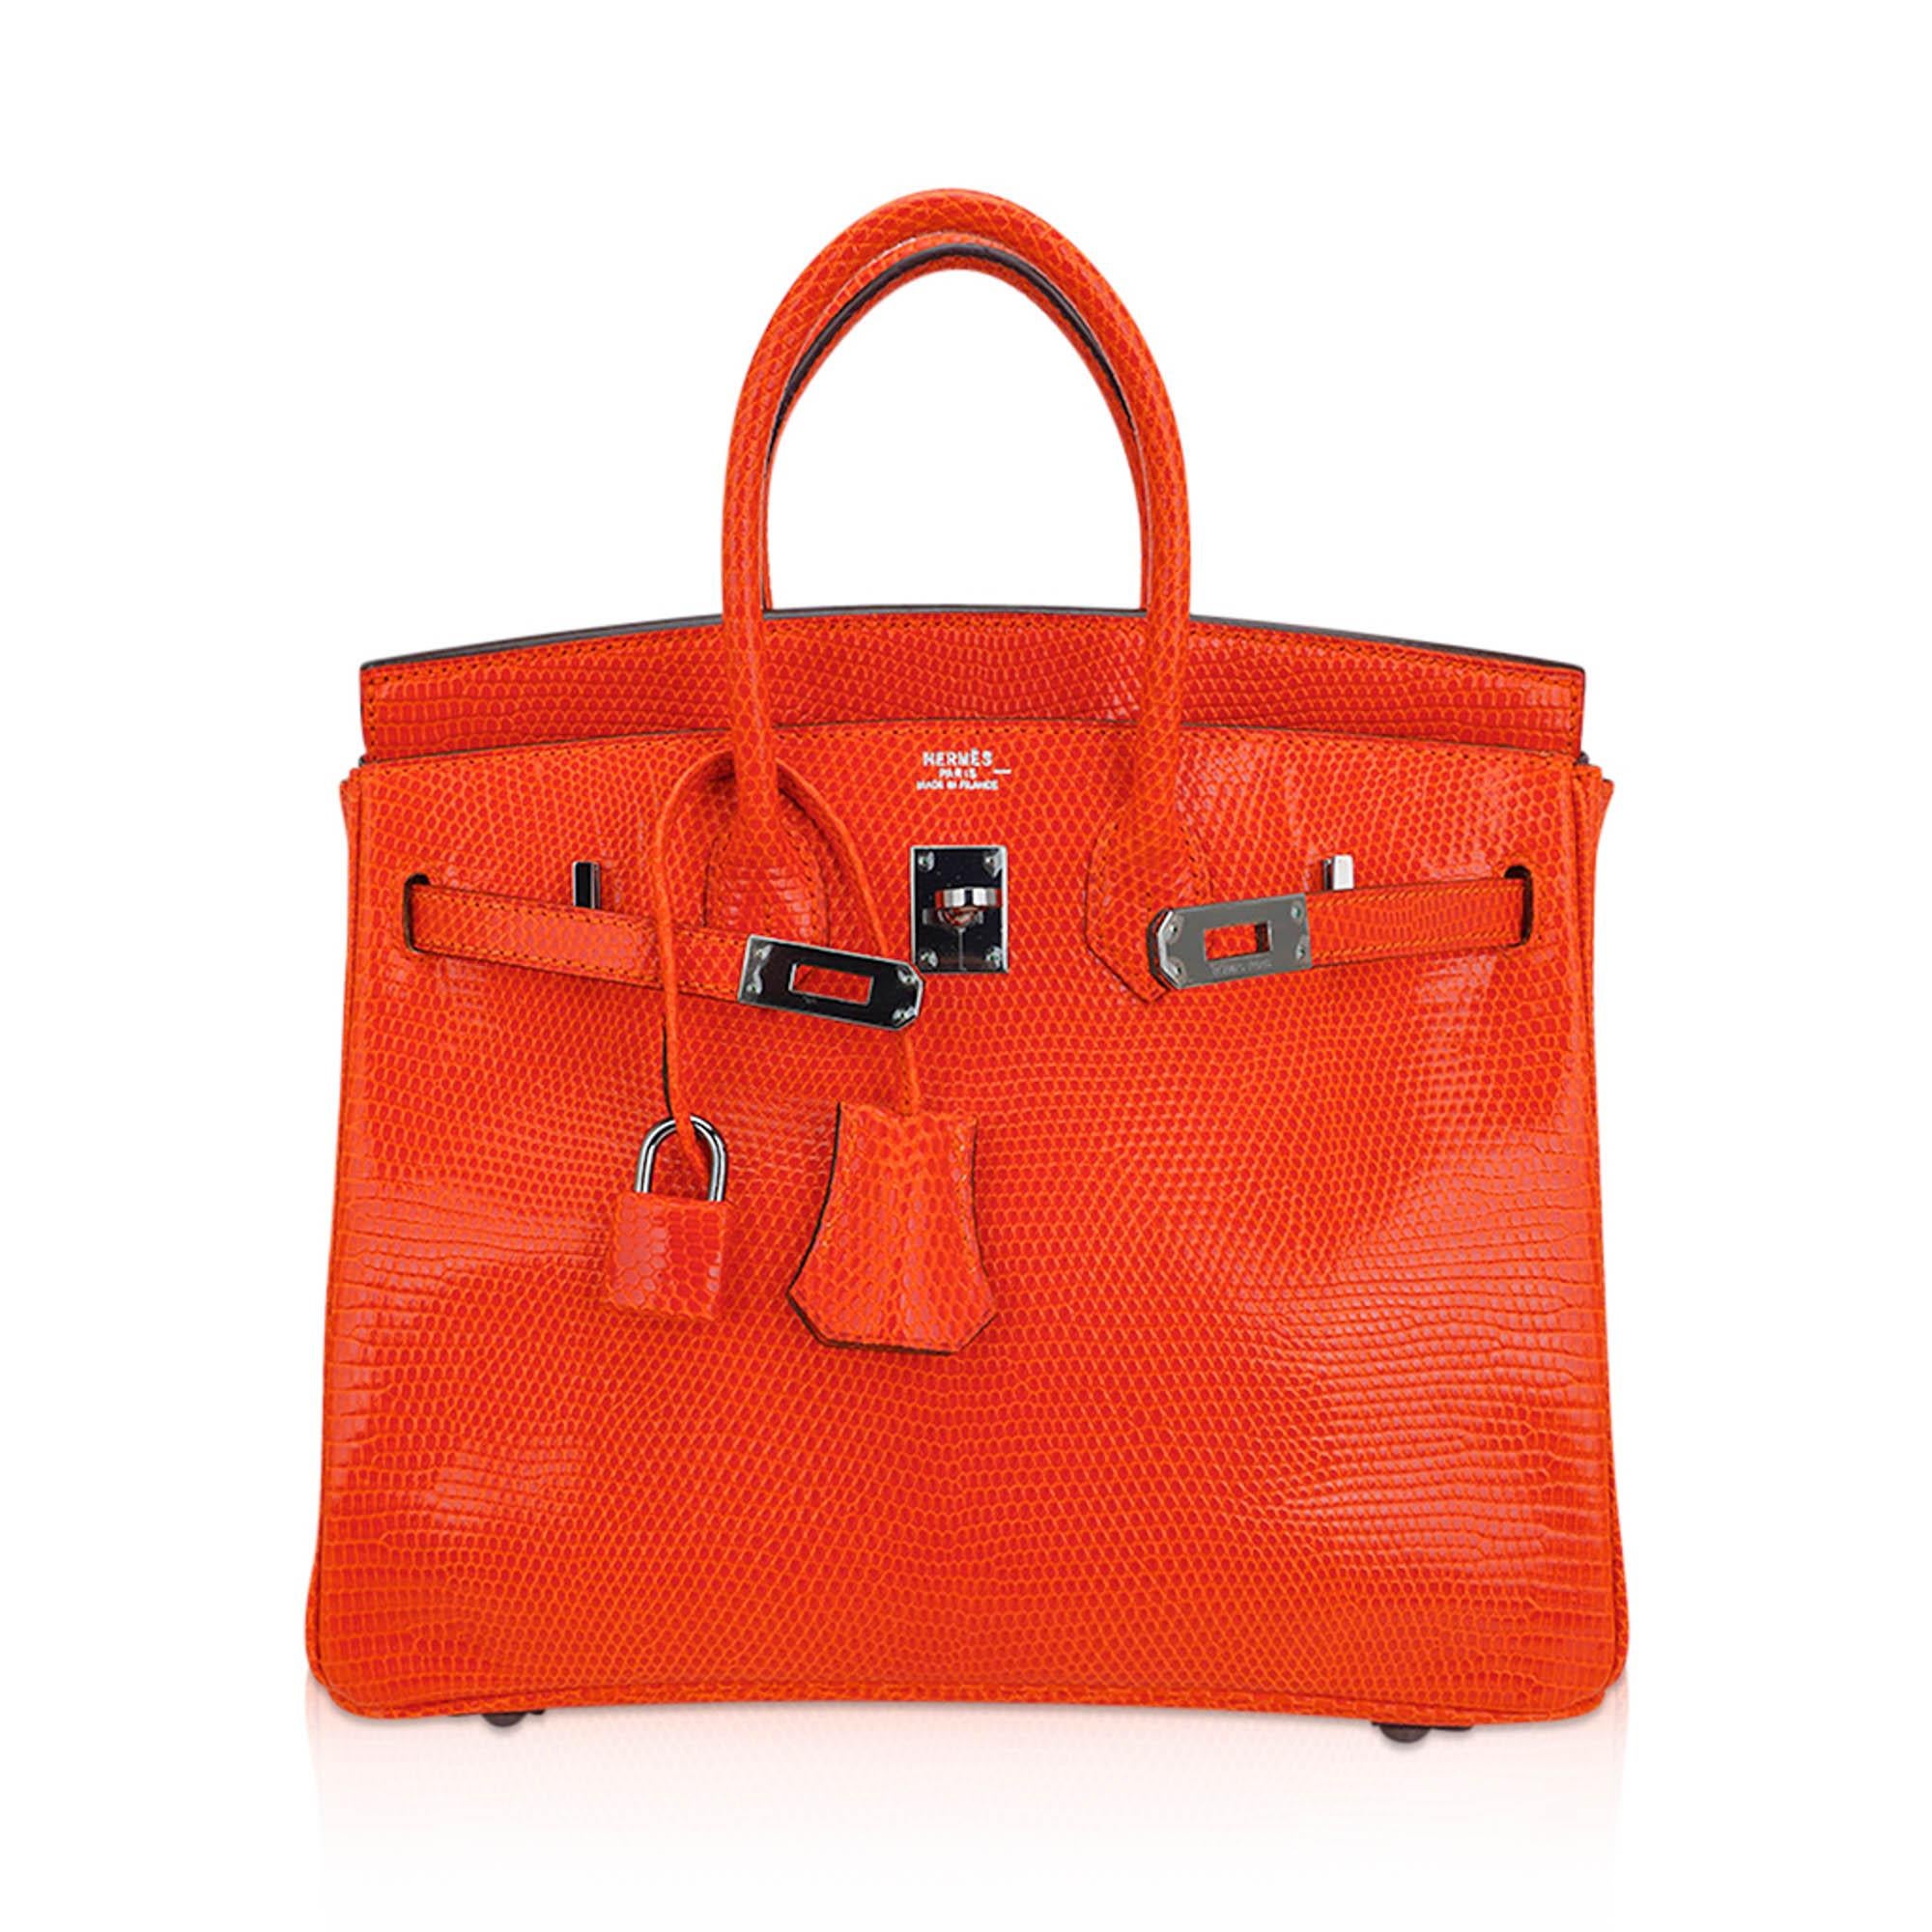 Hermes Birkin 25 Orange Tangerine Lizard Limited Edition Bag Ruthenium Hardware In New Condition For Sale In Miami, FL